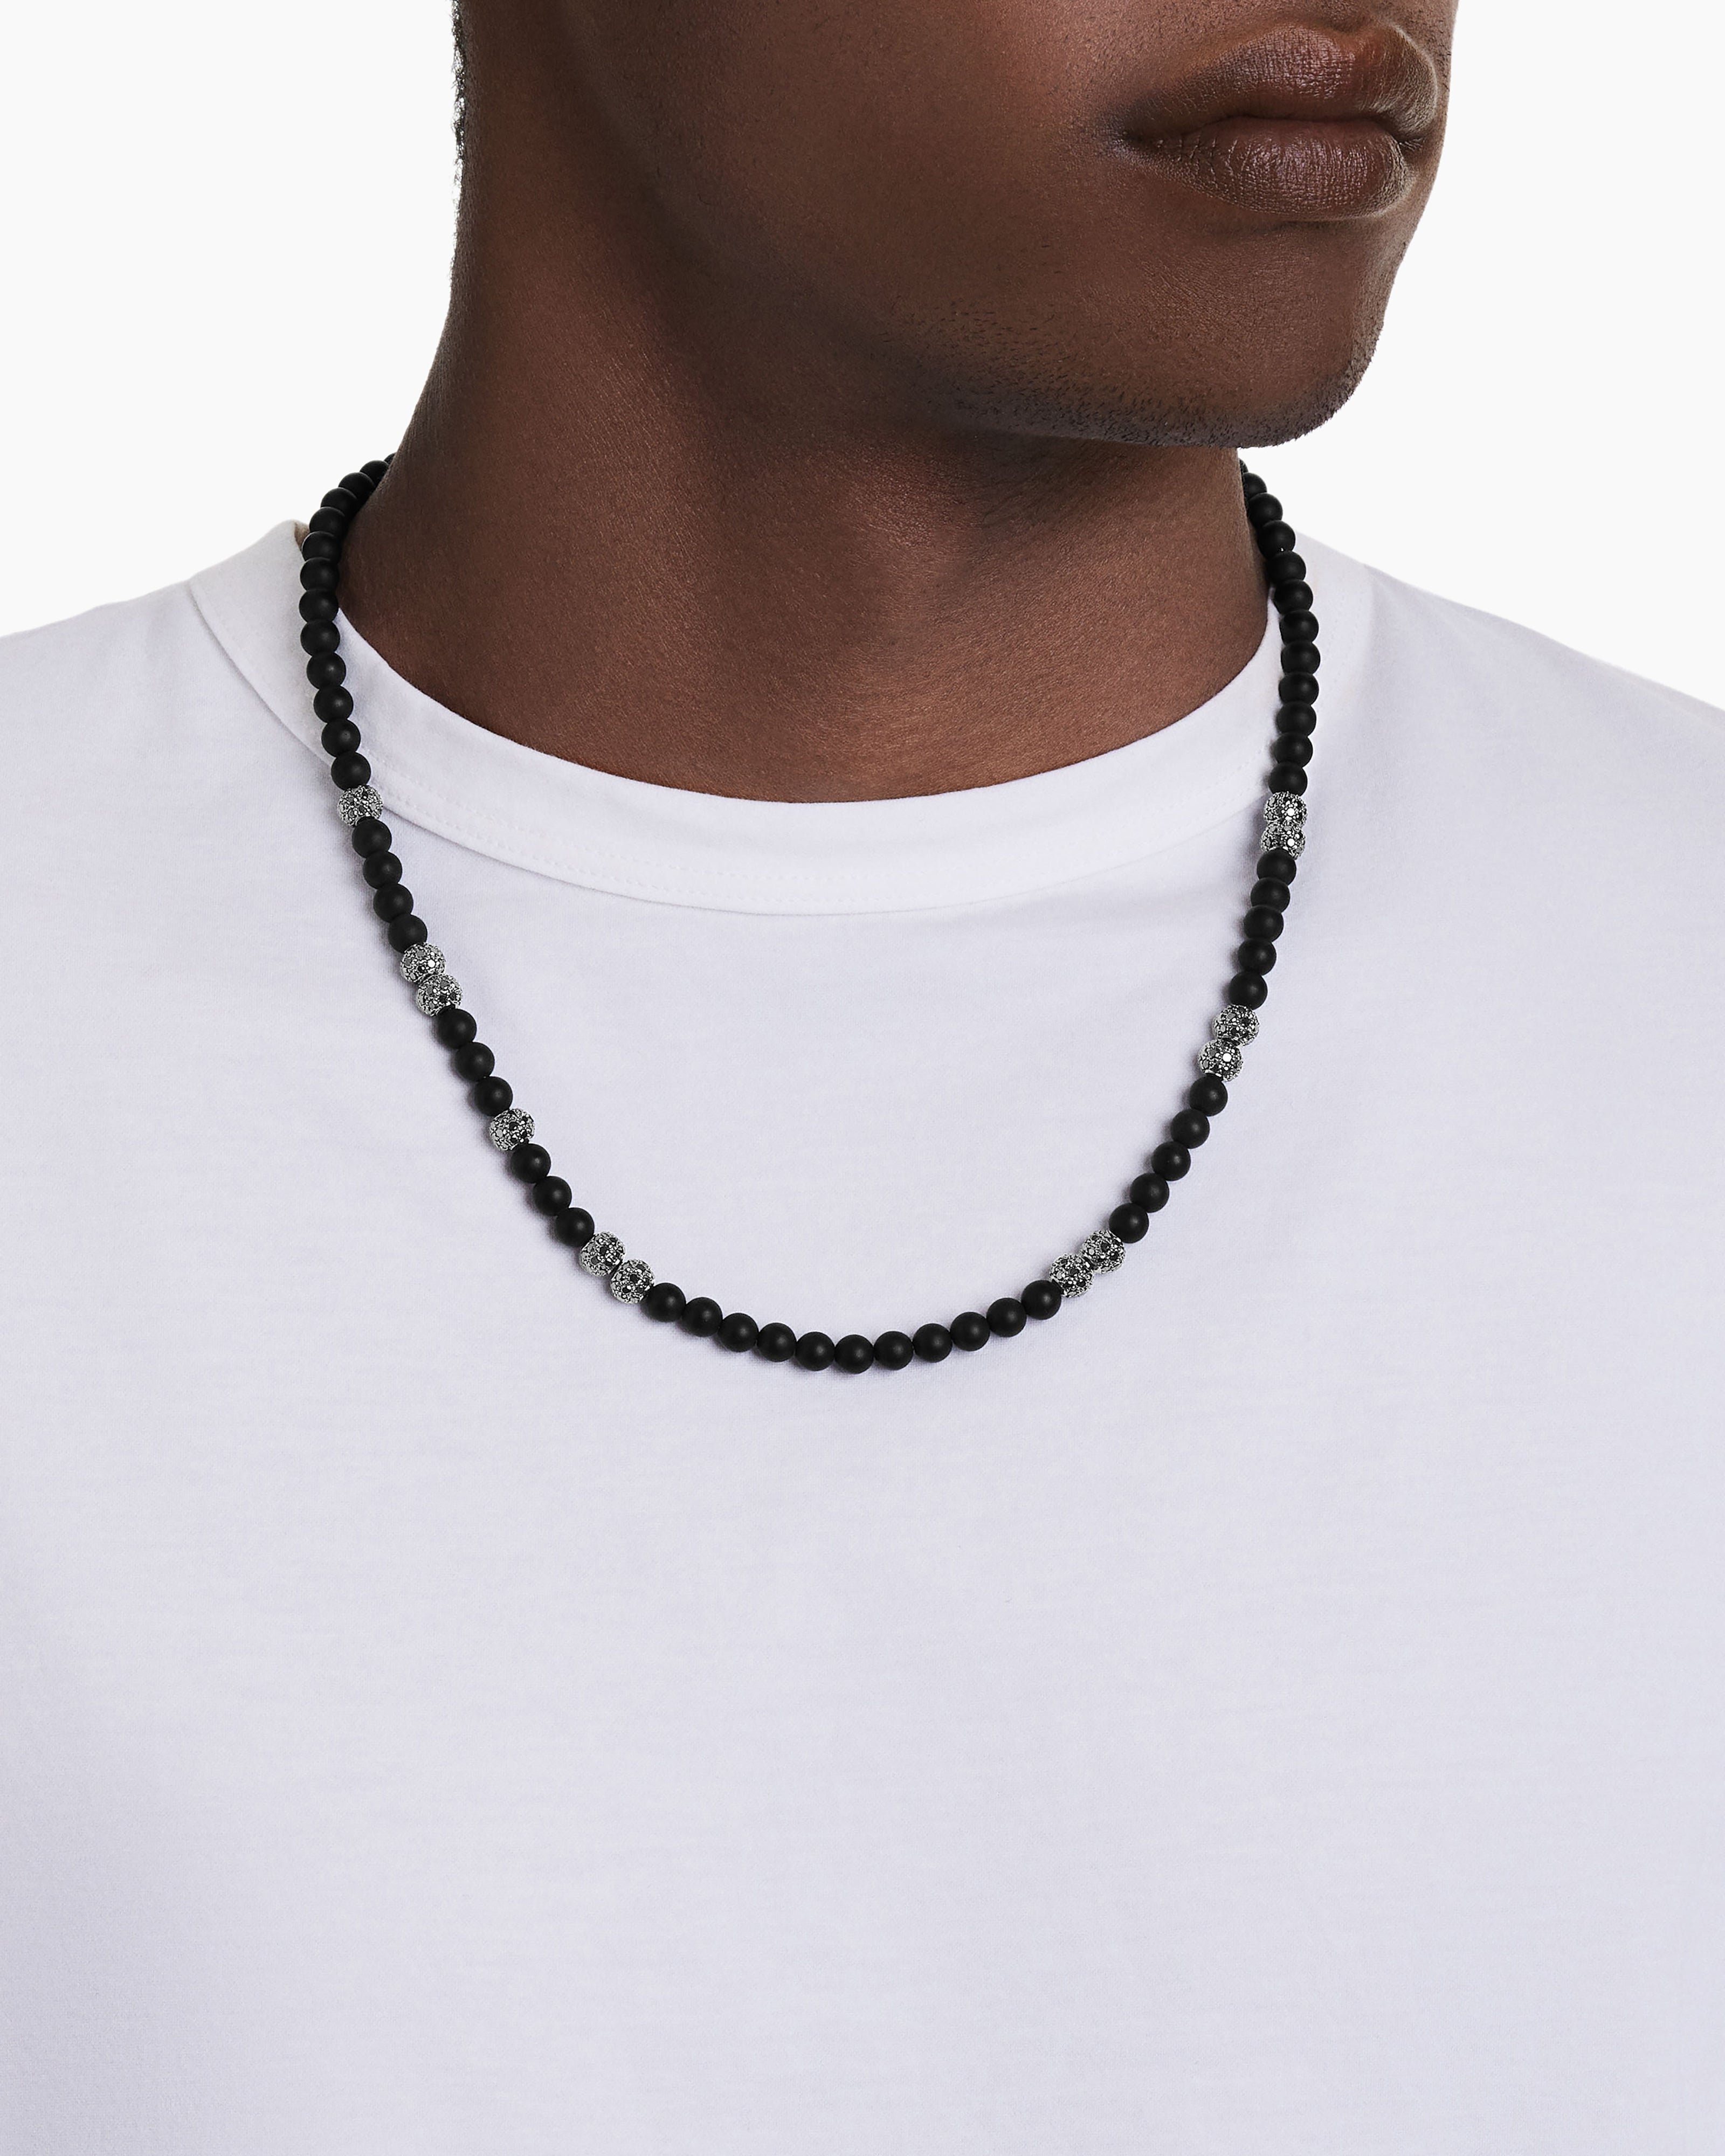 Bysonglezai Necklace Pendant Men Chain Jewelry Women Men'S Beaded Necklace  Necklace Necklace Surfer Necklace Men'S Necklace A6 : Amazon.co.uk: Fashion